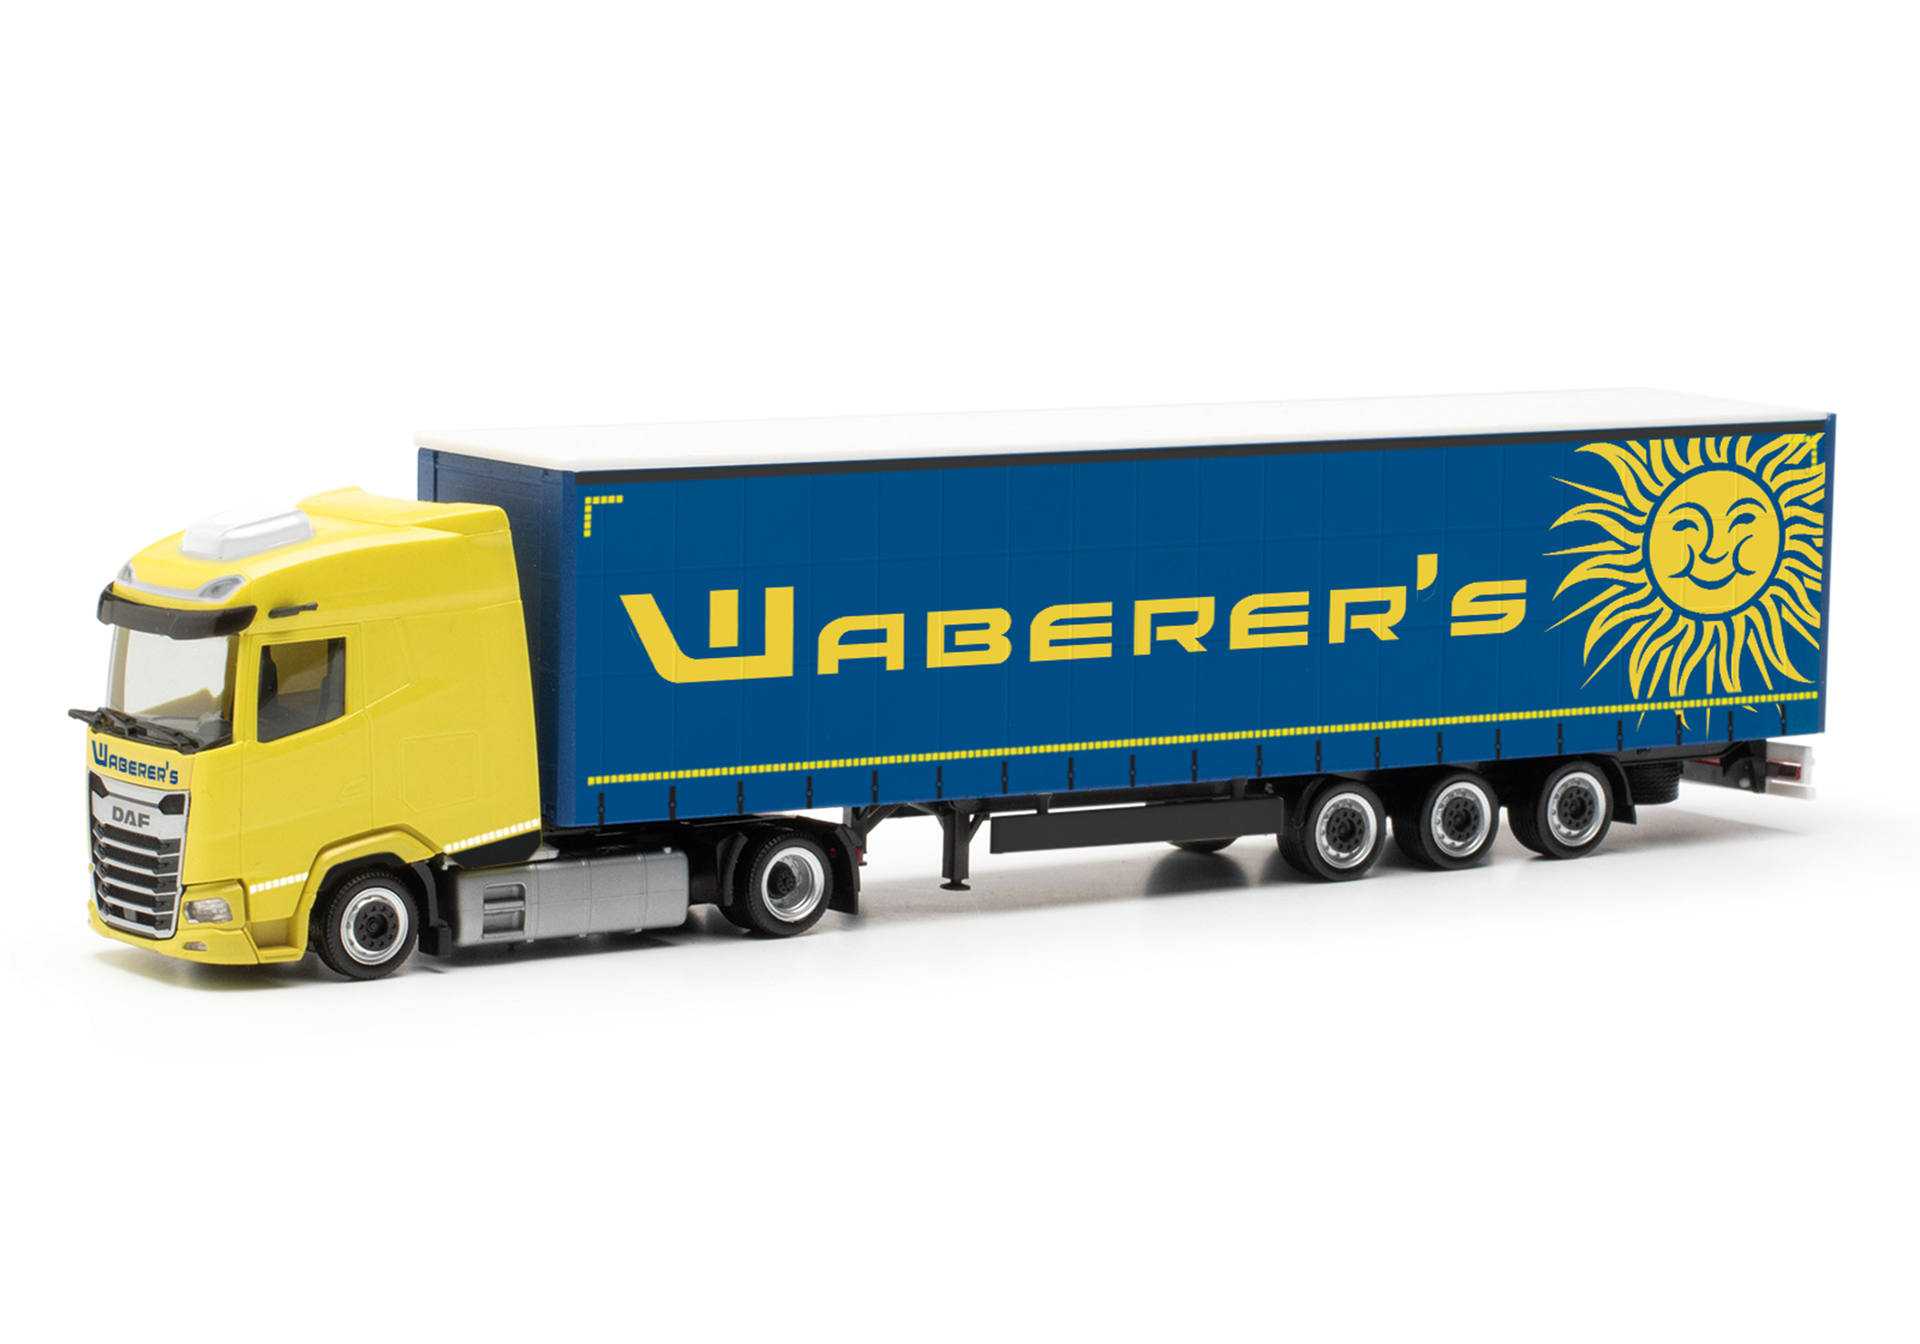 DAF XG lowliner semitrailer truck "Waberer's" (Hungary/Budapest)